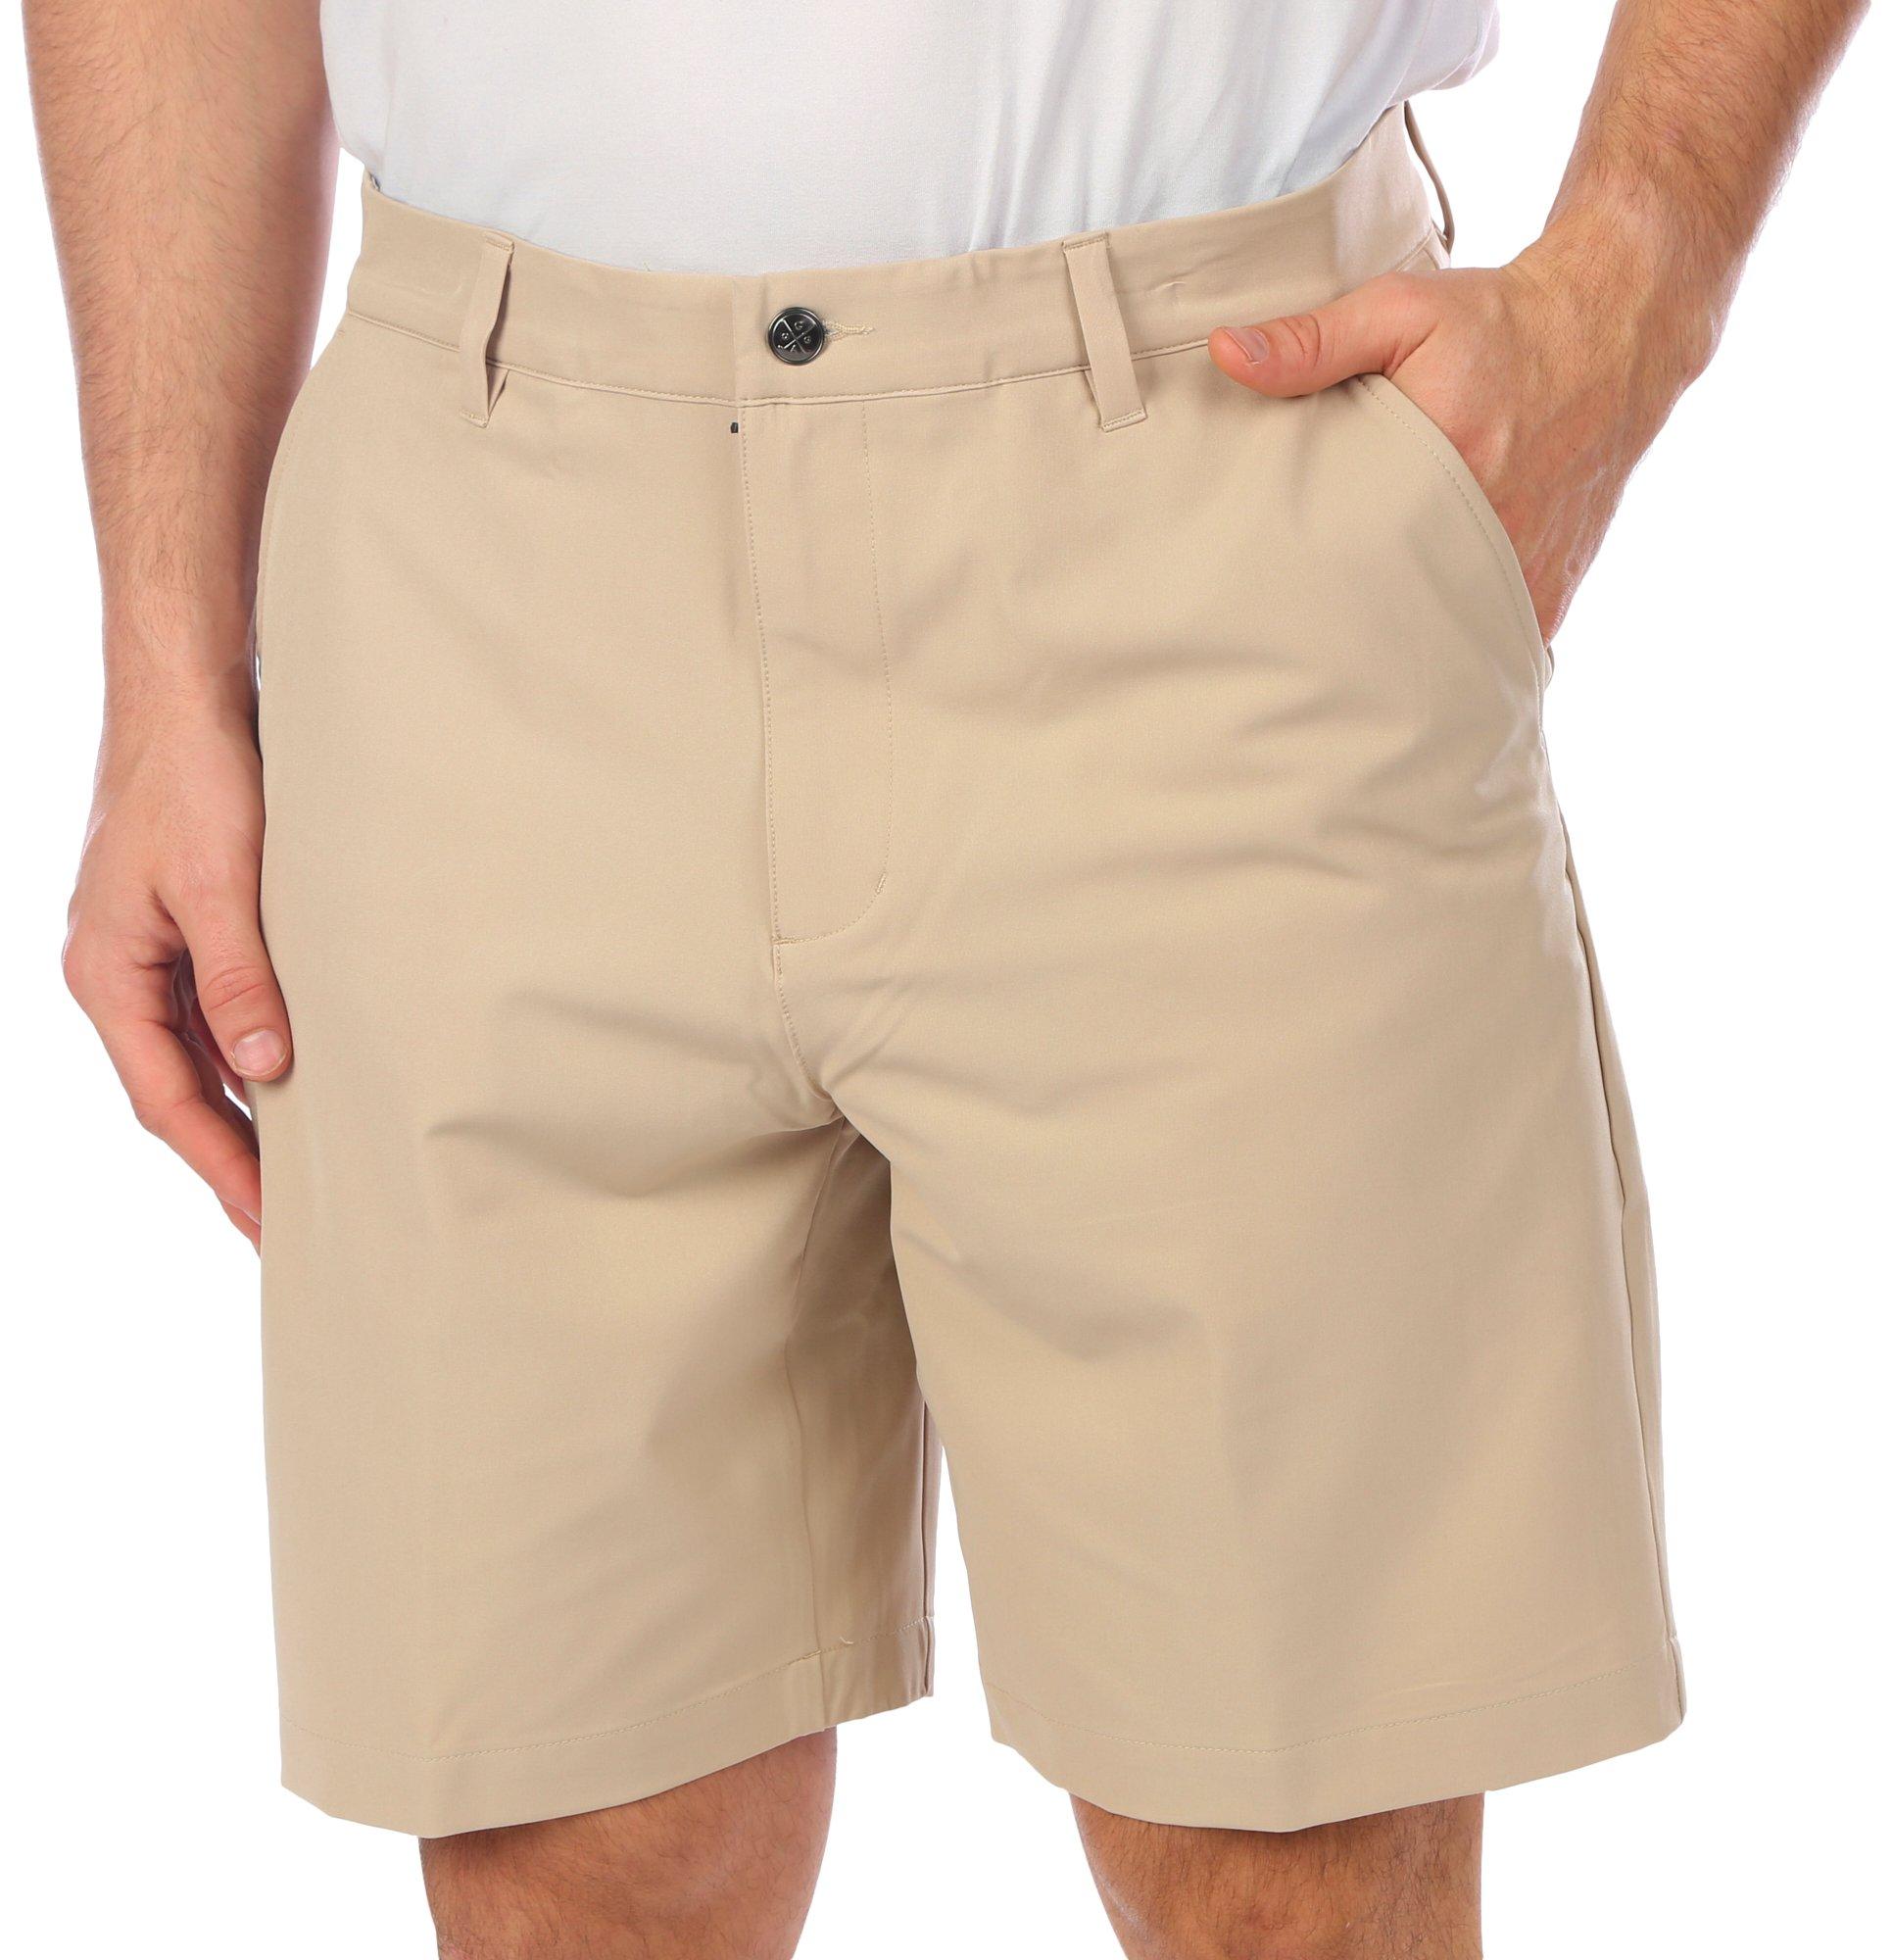 Mens Solid 4-Way Stretch Golf Shorts